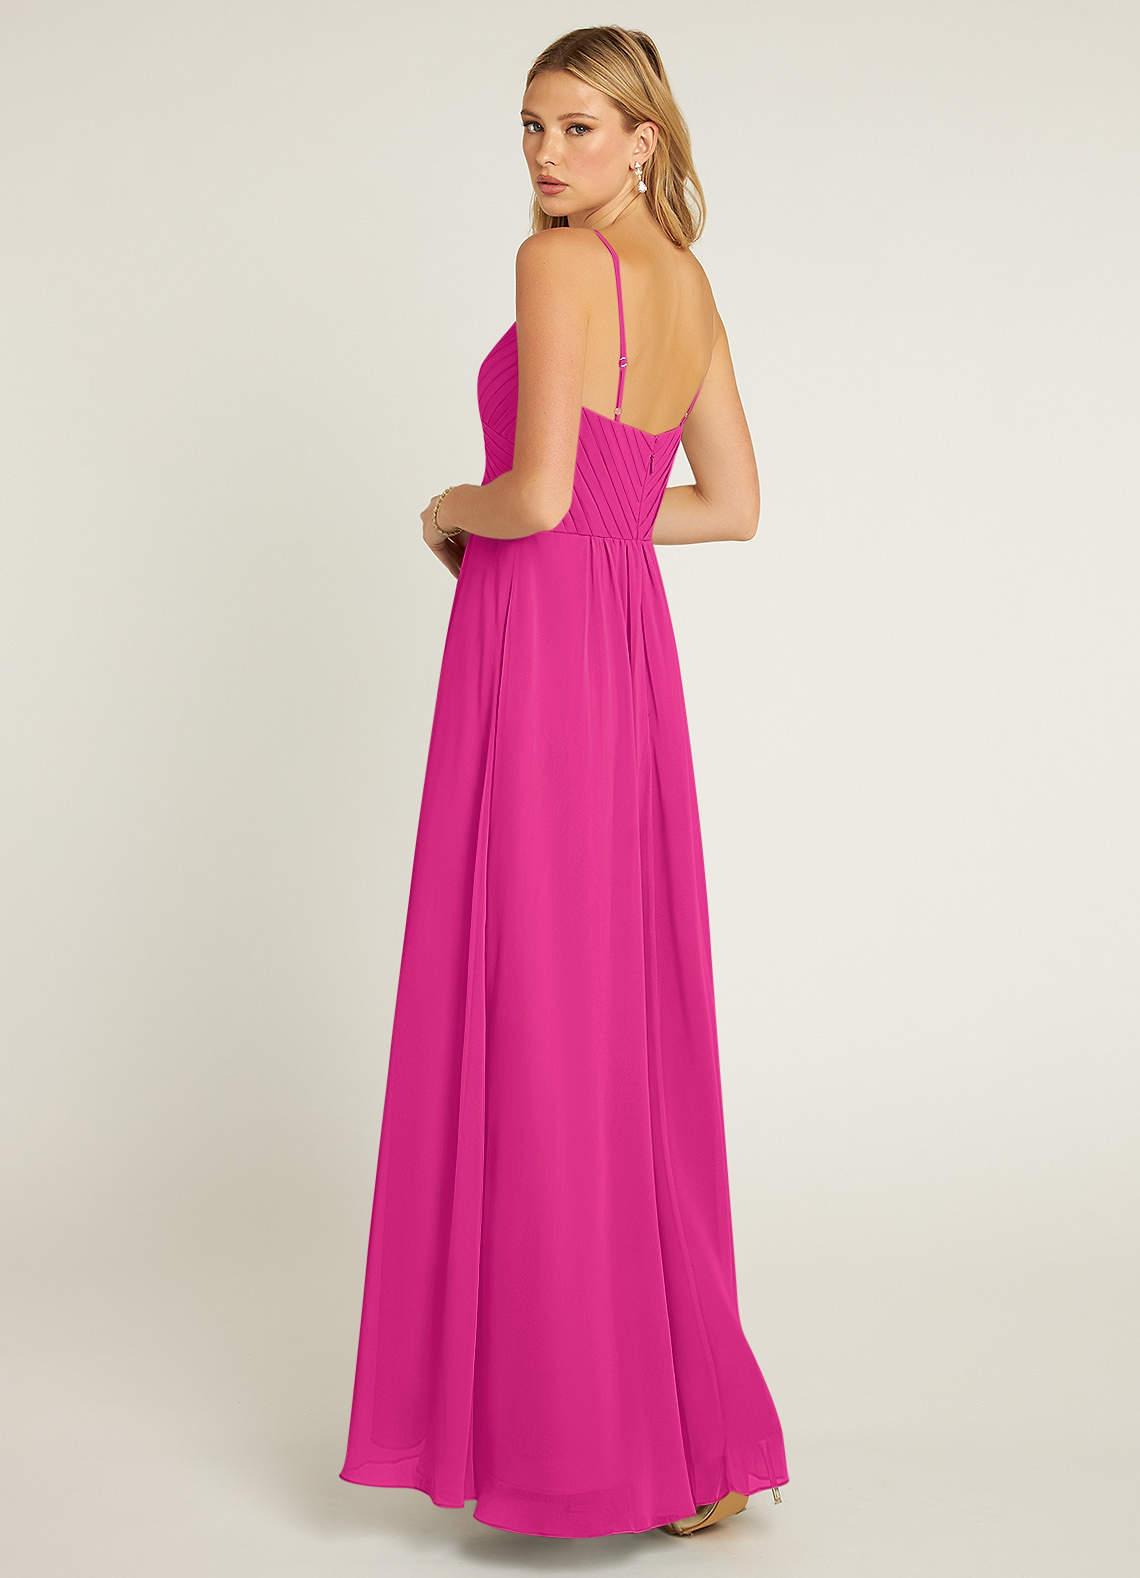 Azazie Shannon Bridesmaid Dresses A-Line Pleated Chiffon Floor-Length Dress image1